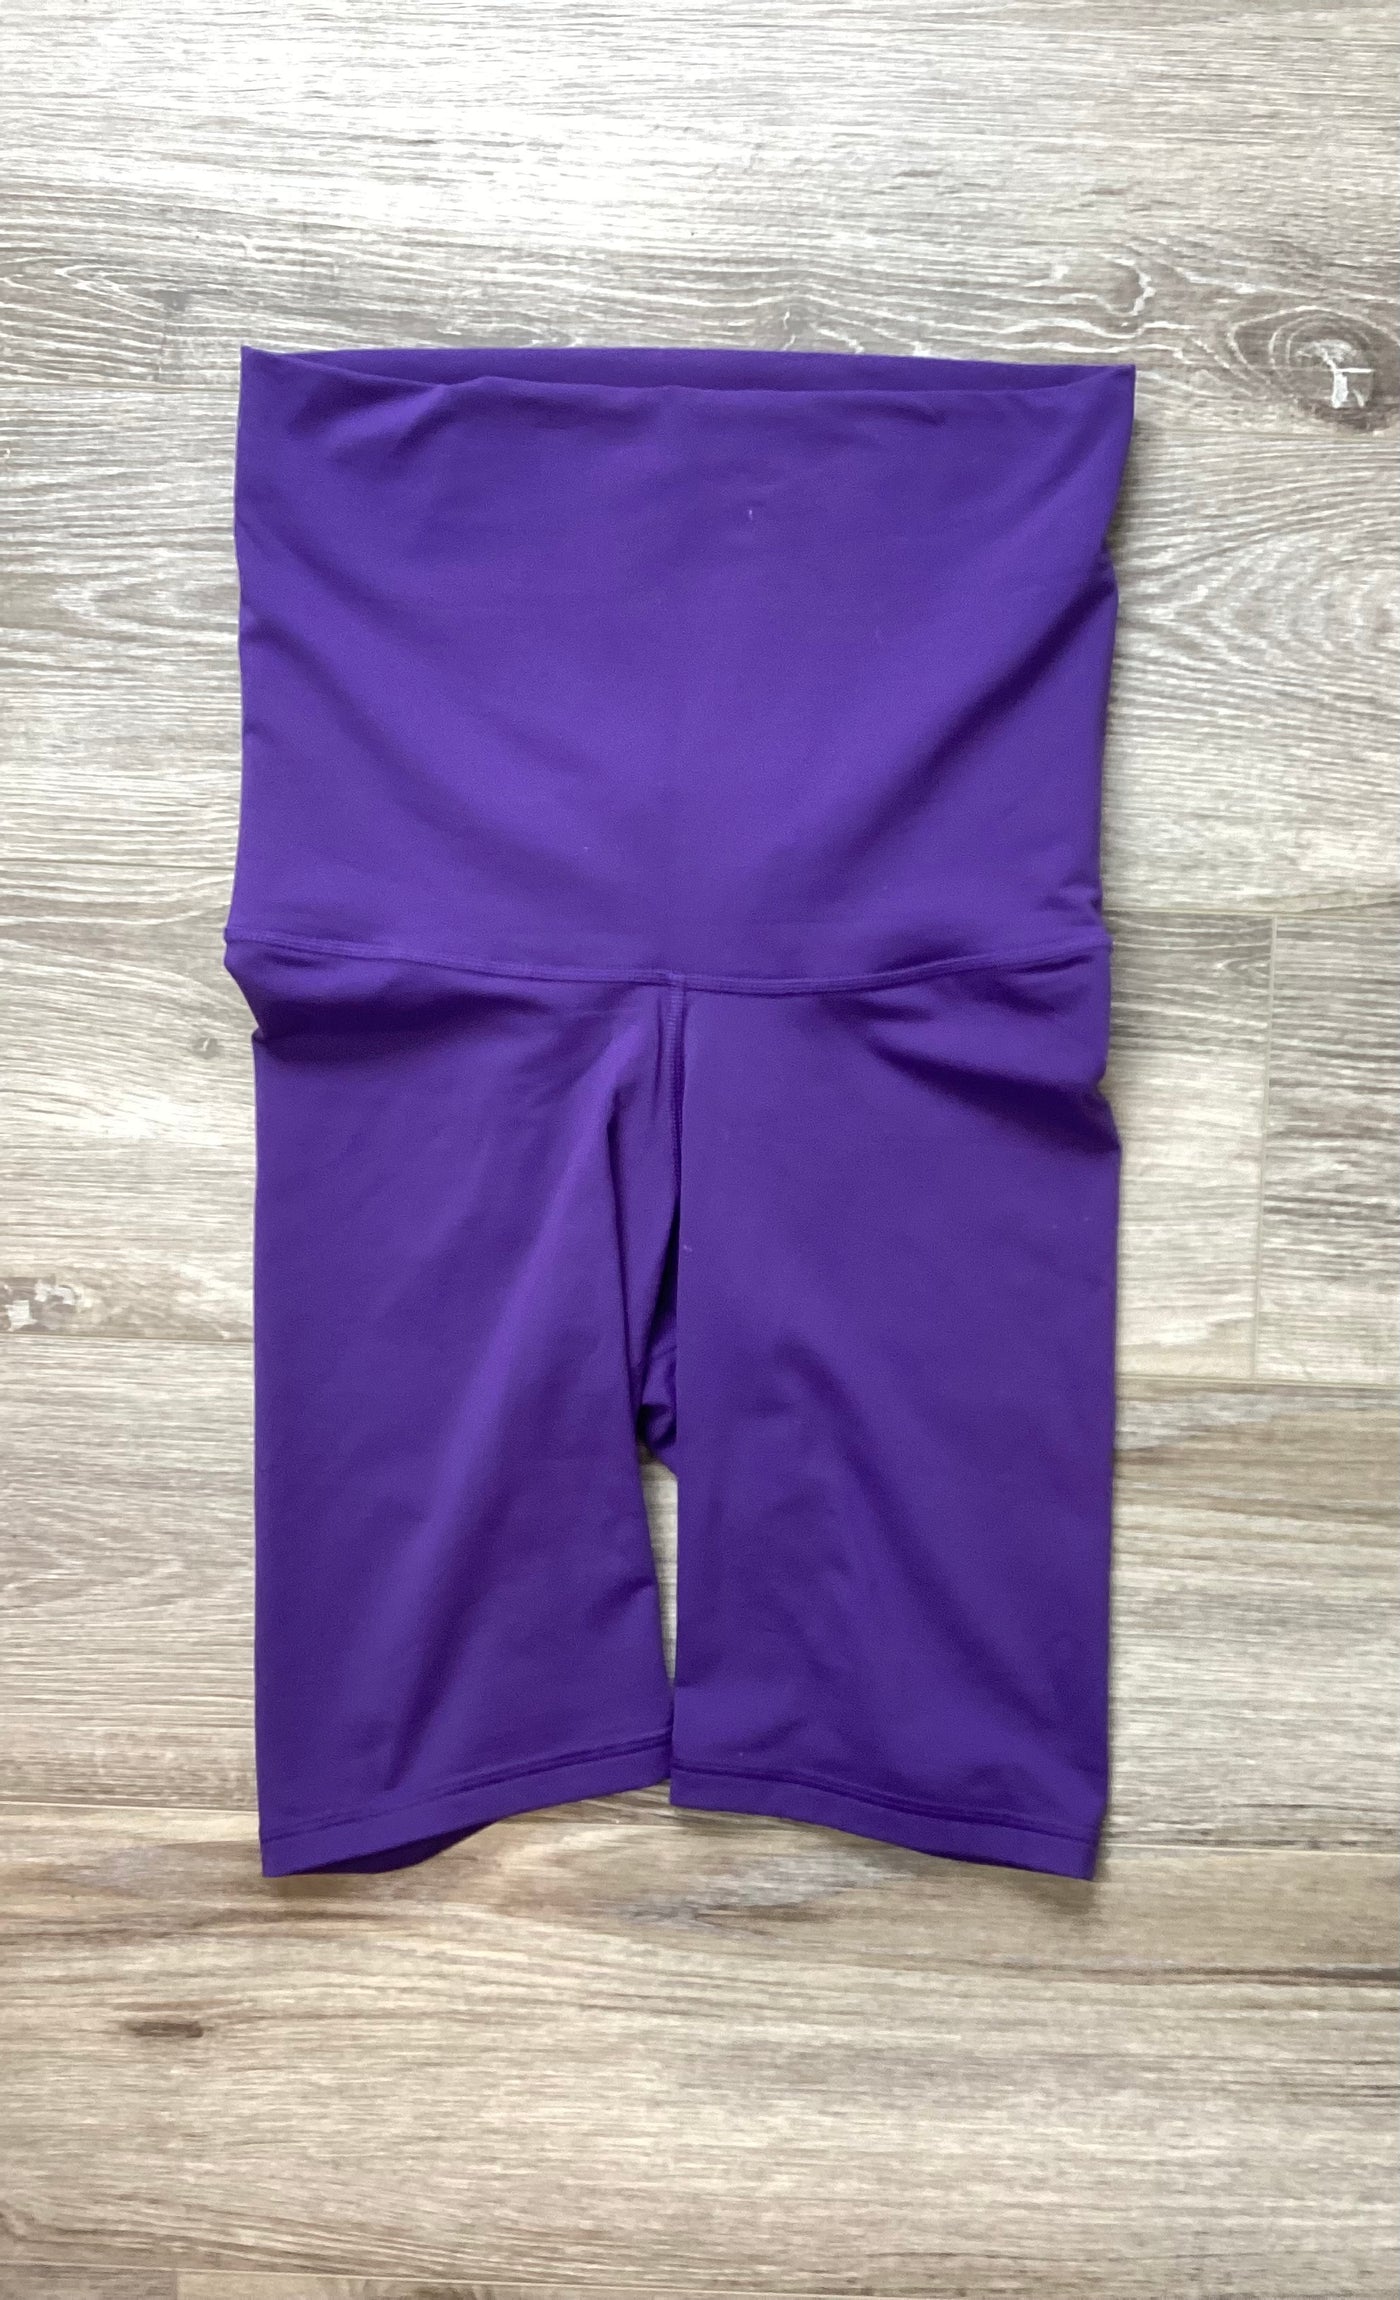 Reebok purple overbump cycle shorts - Size S (Approx UK 8/10)